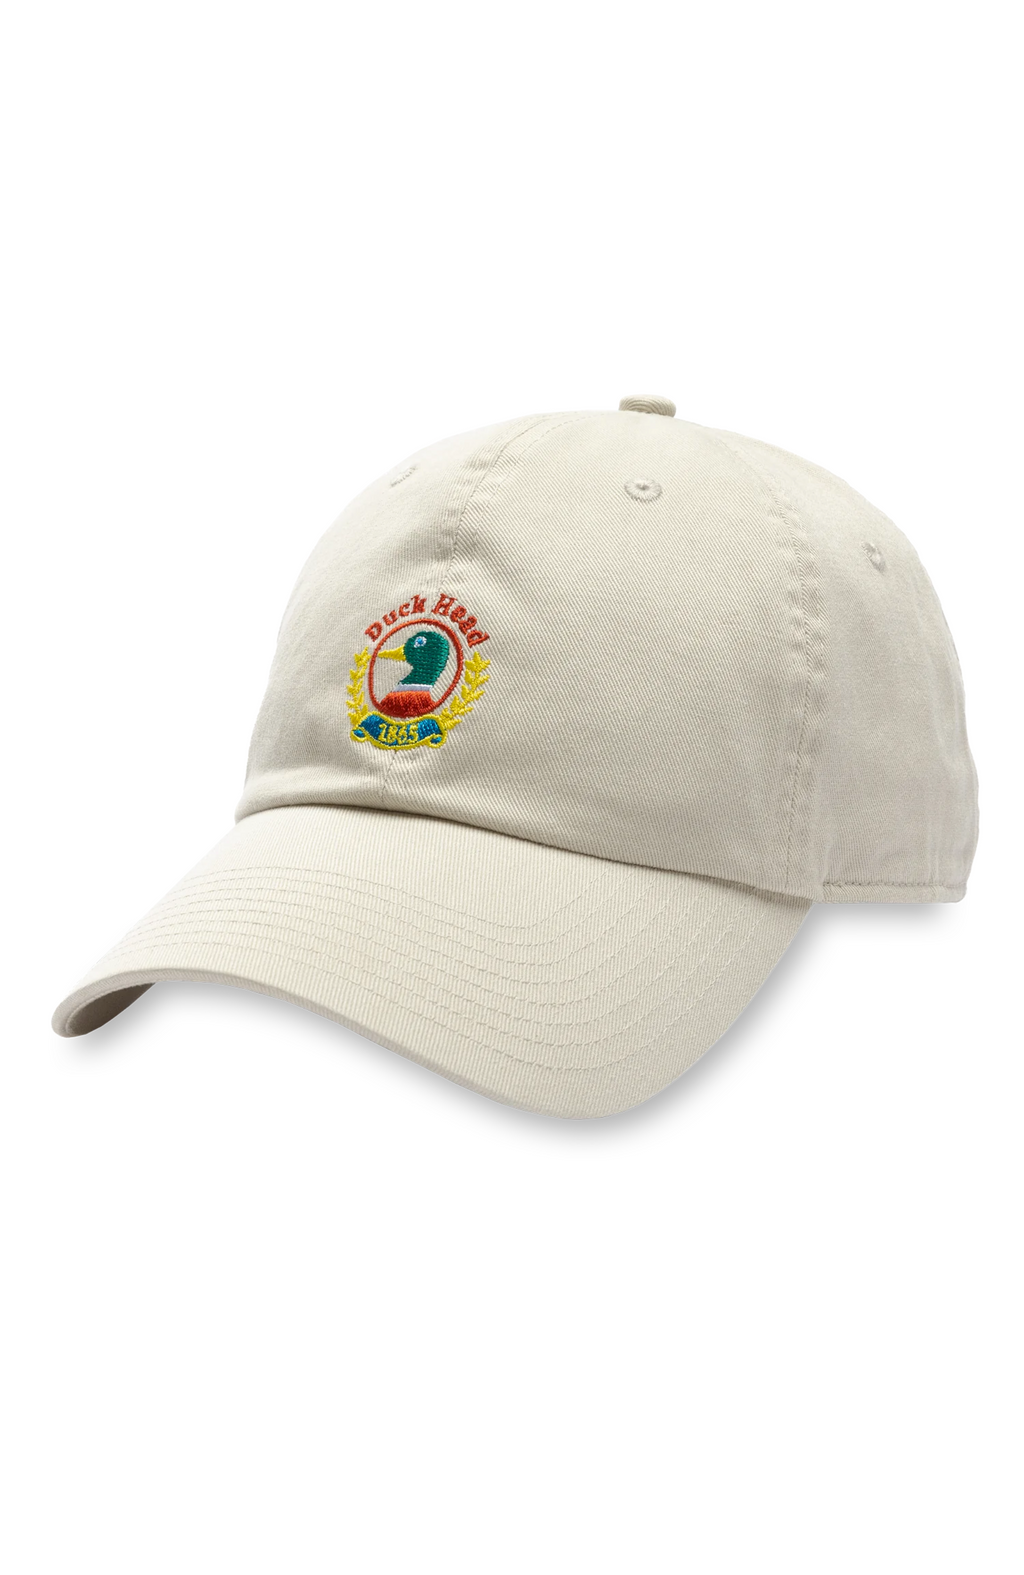 Duck Head - Embroidered Crest Hat